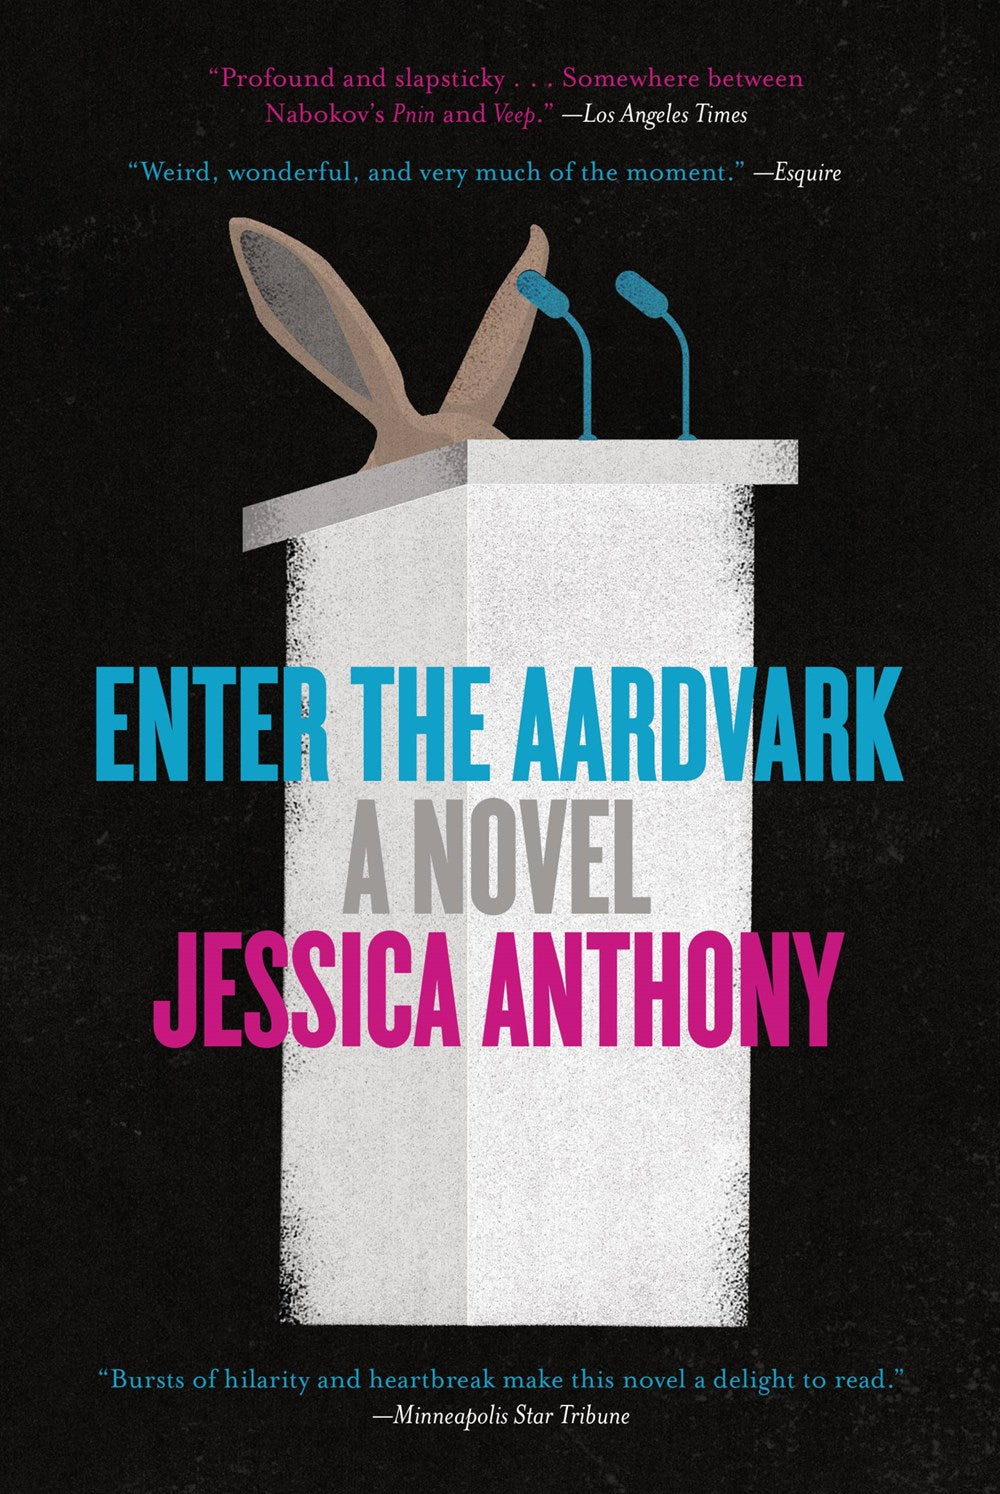 Enter the Aardvark: A Novel by Jessica Anthony